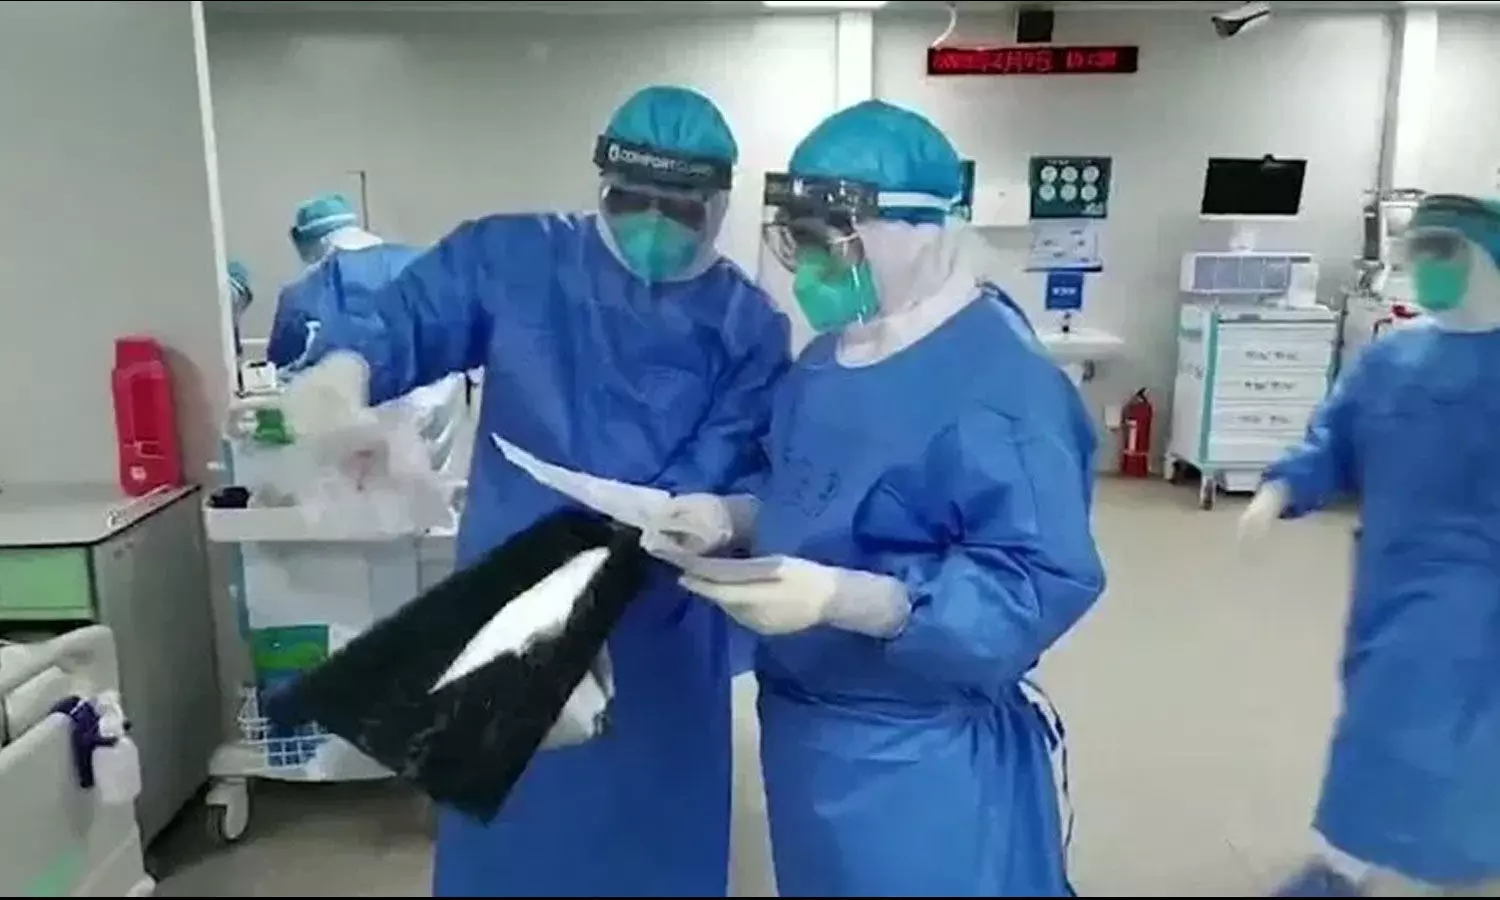 Indian doctors fight coronavirus with raincoats, helmets amid lack of equipment